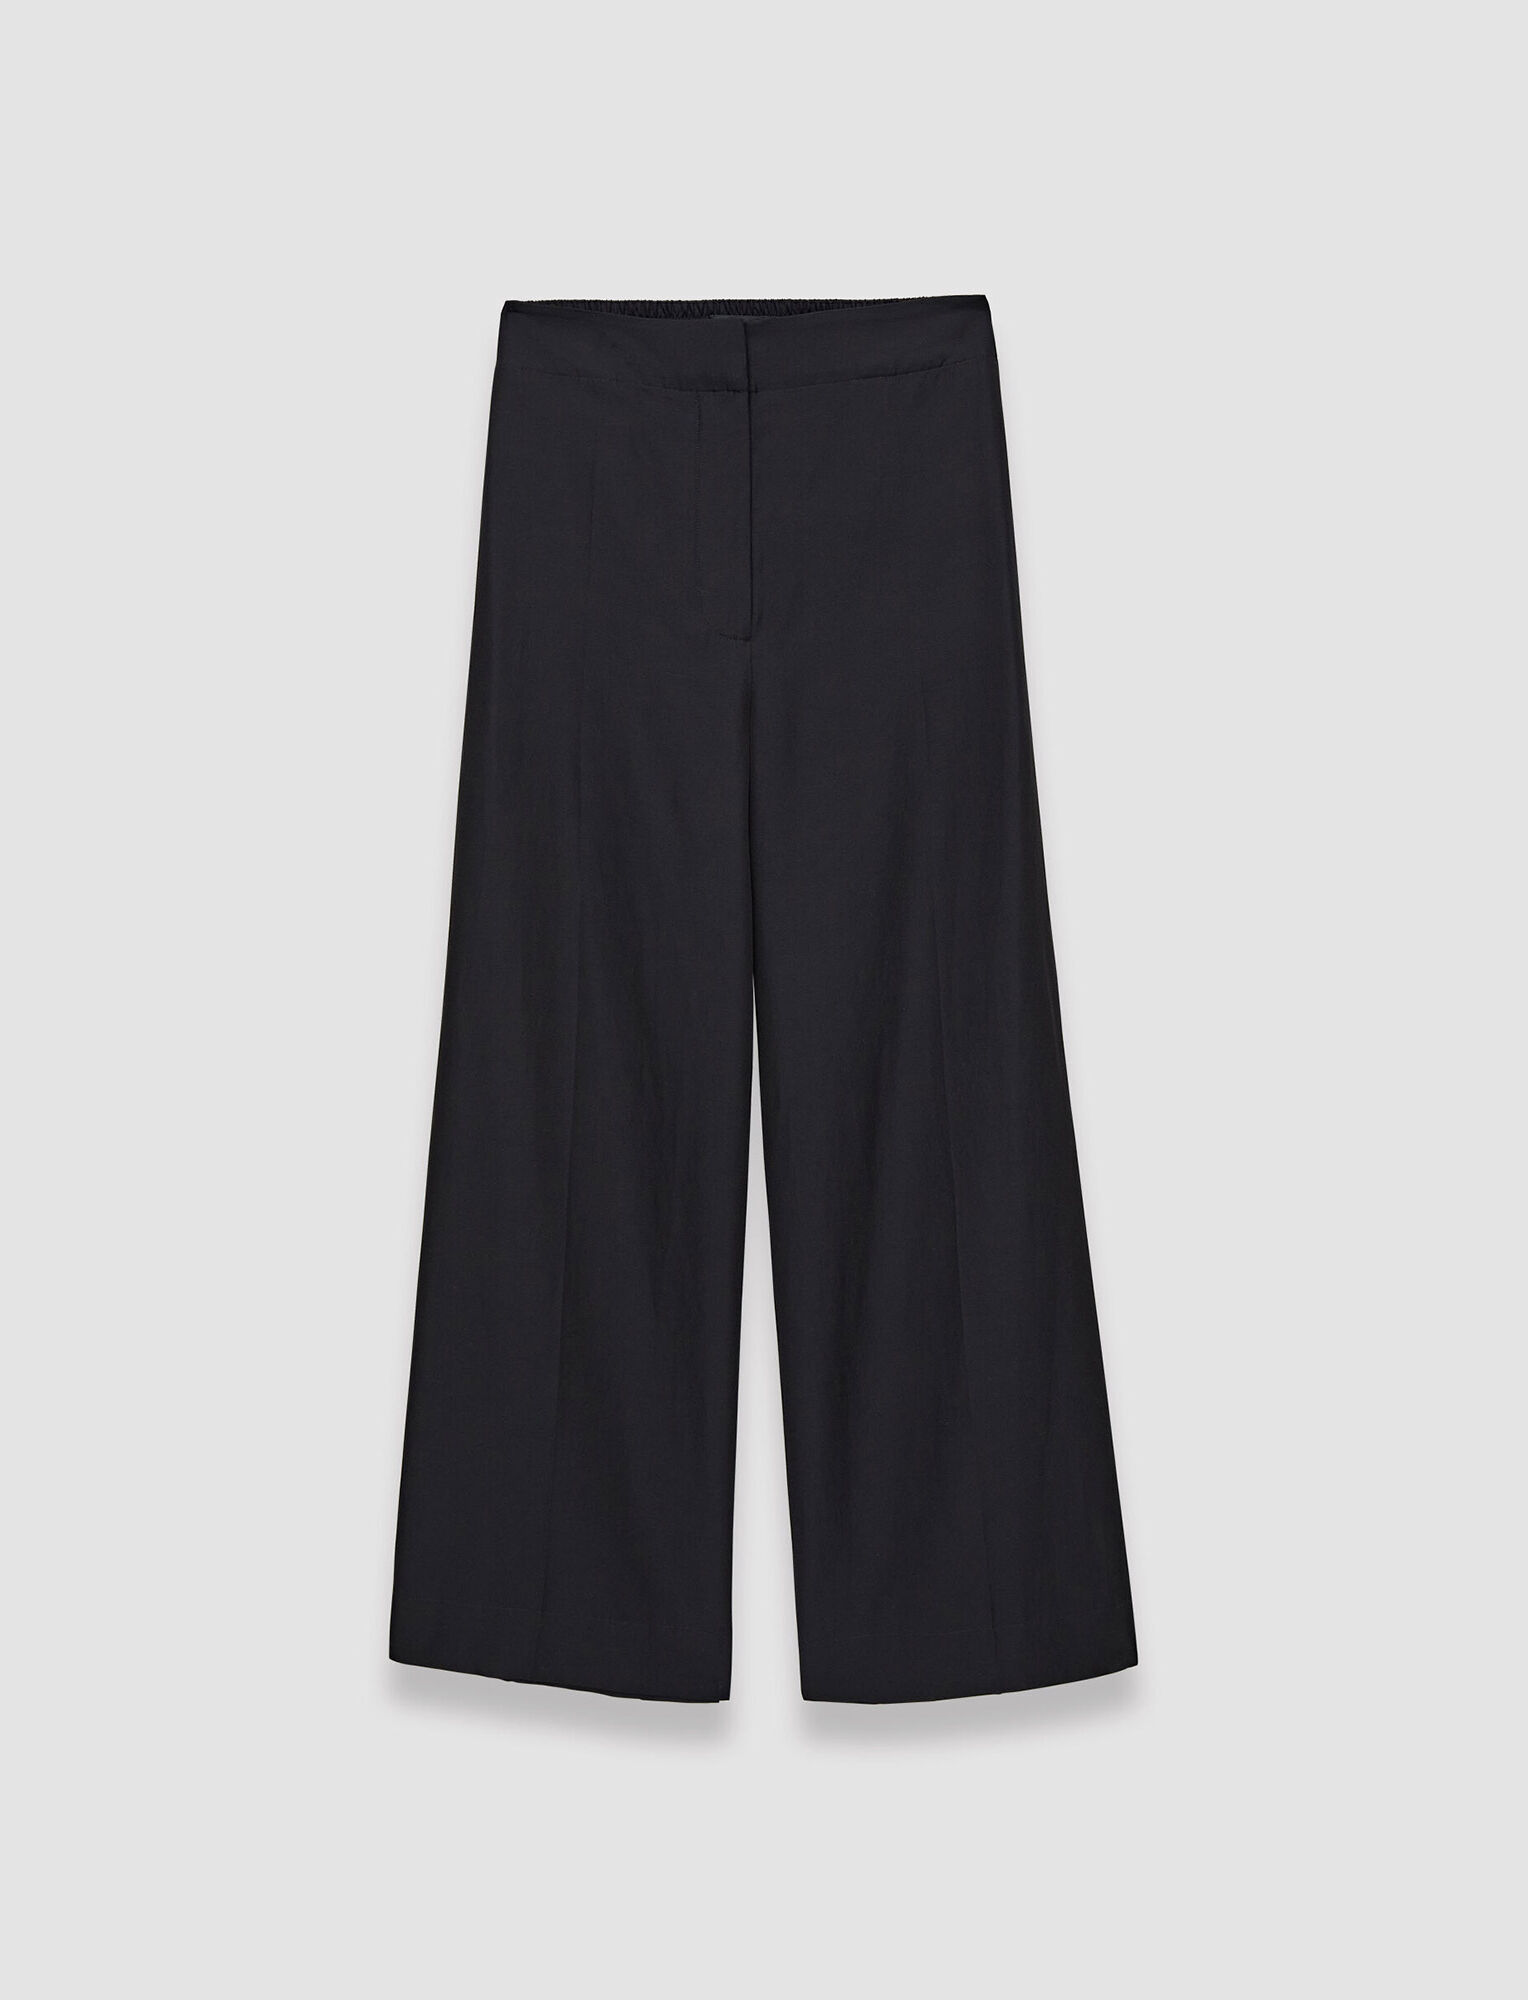 Joseph, Soft Cotton Silk Thurlow Trousers, in Black